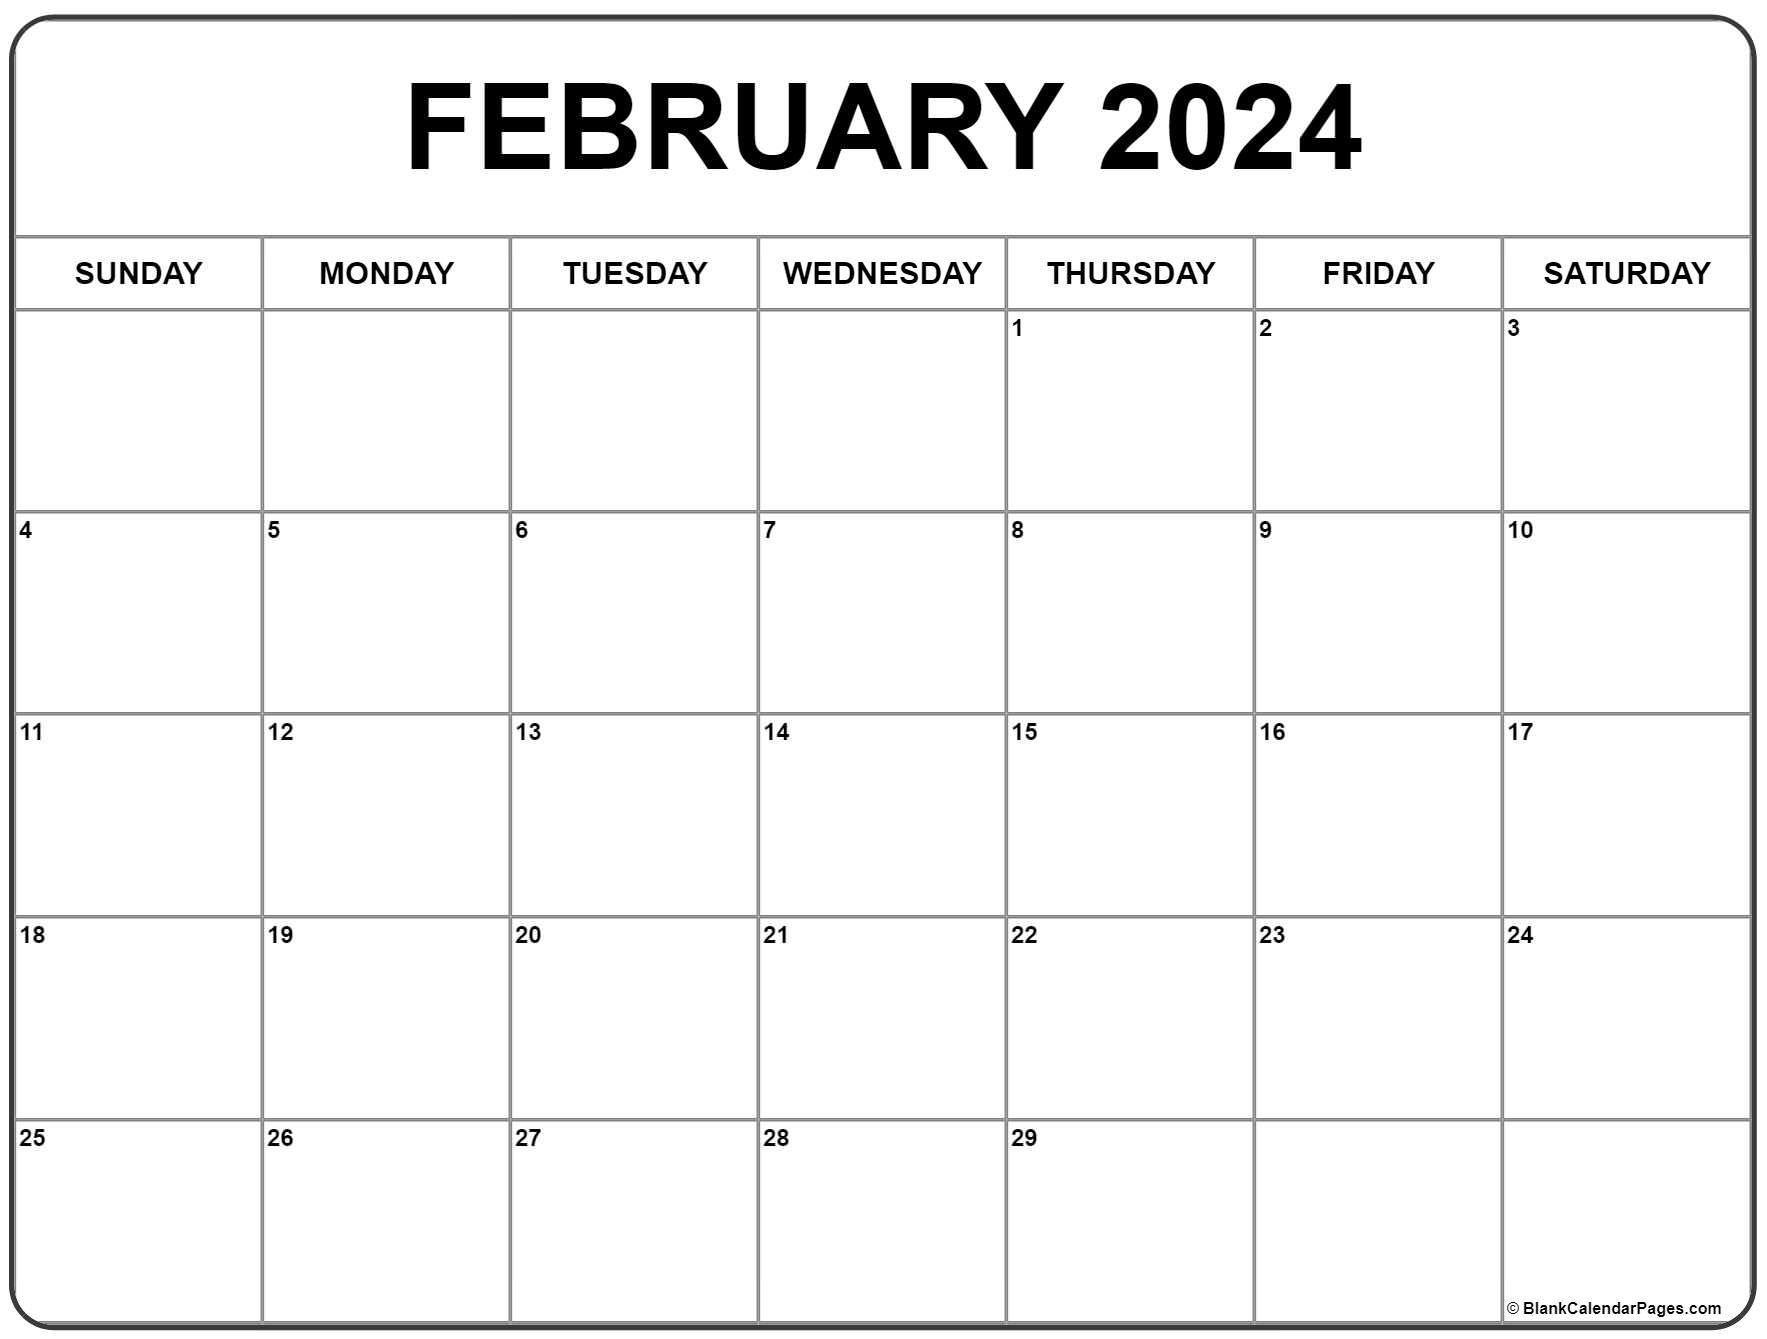 February 2024 Calendar | Free Printable Calendar | Printable Calendar 2024 Feb